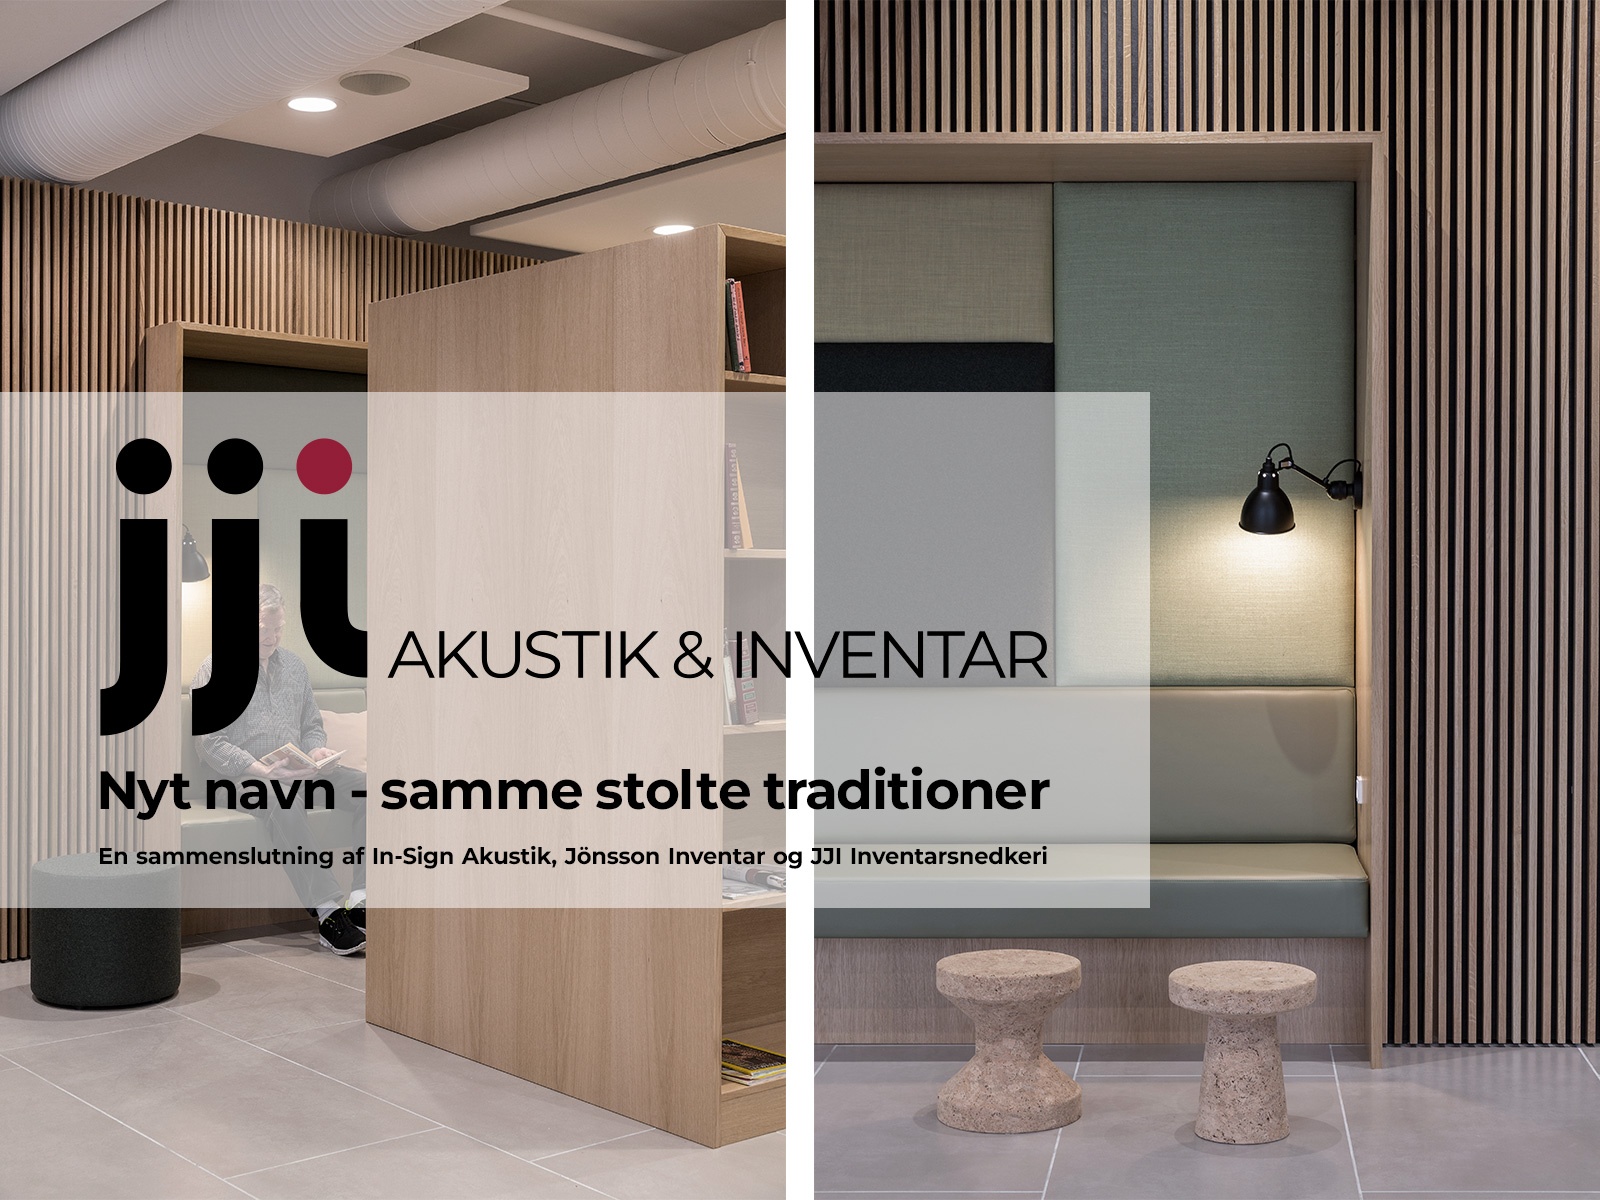 JJI Akustik & Inventar A/S